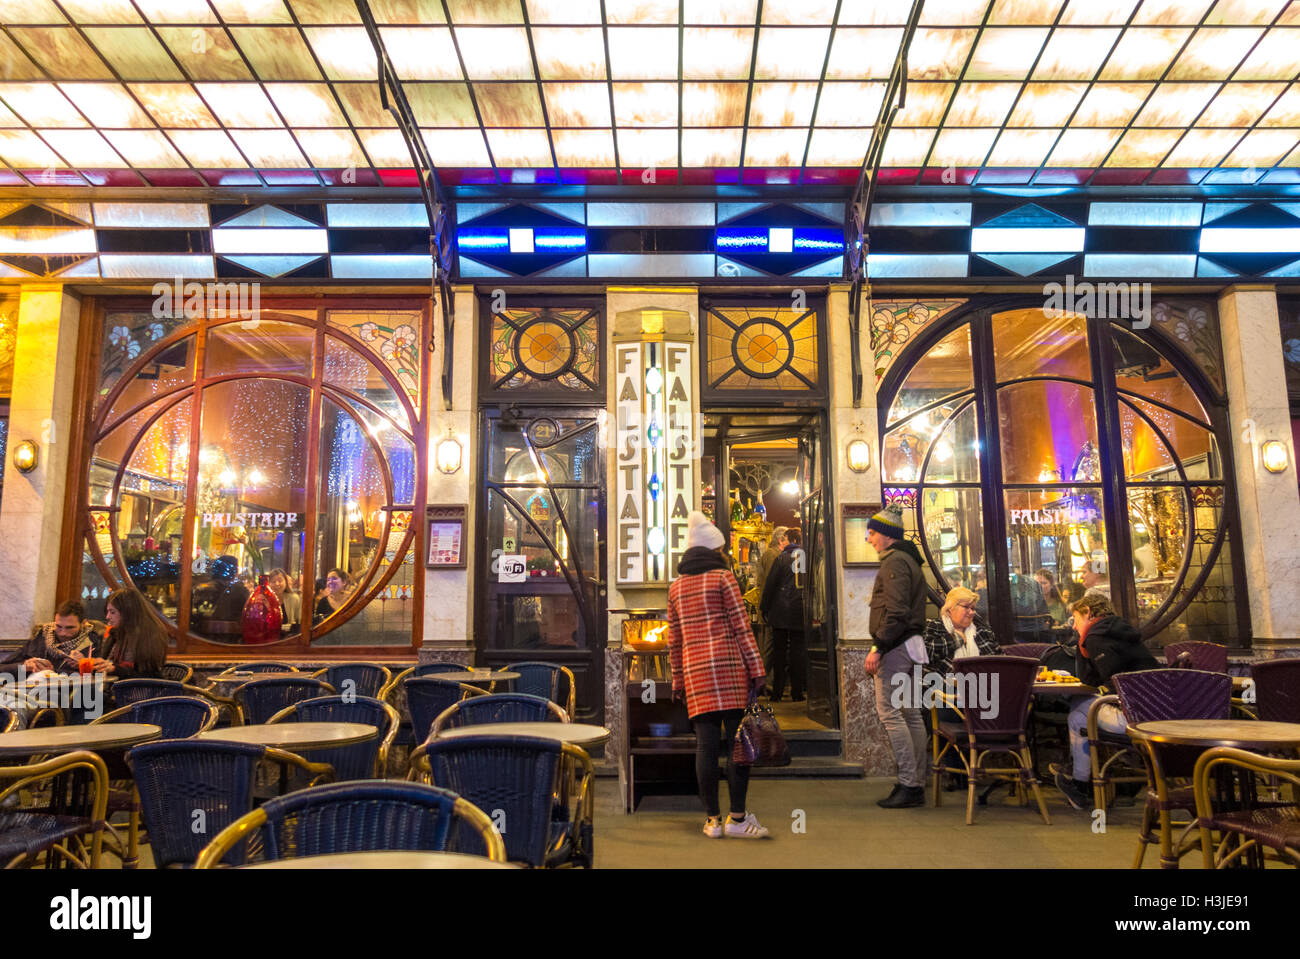 Bruselas restaurante Le Falstaff cafe bar pub. Famoso pub popular con Art-Nouveau interior. Foto de stock